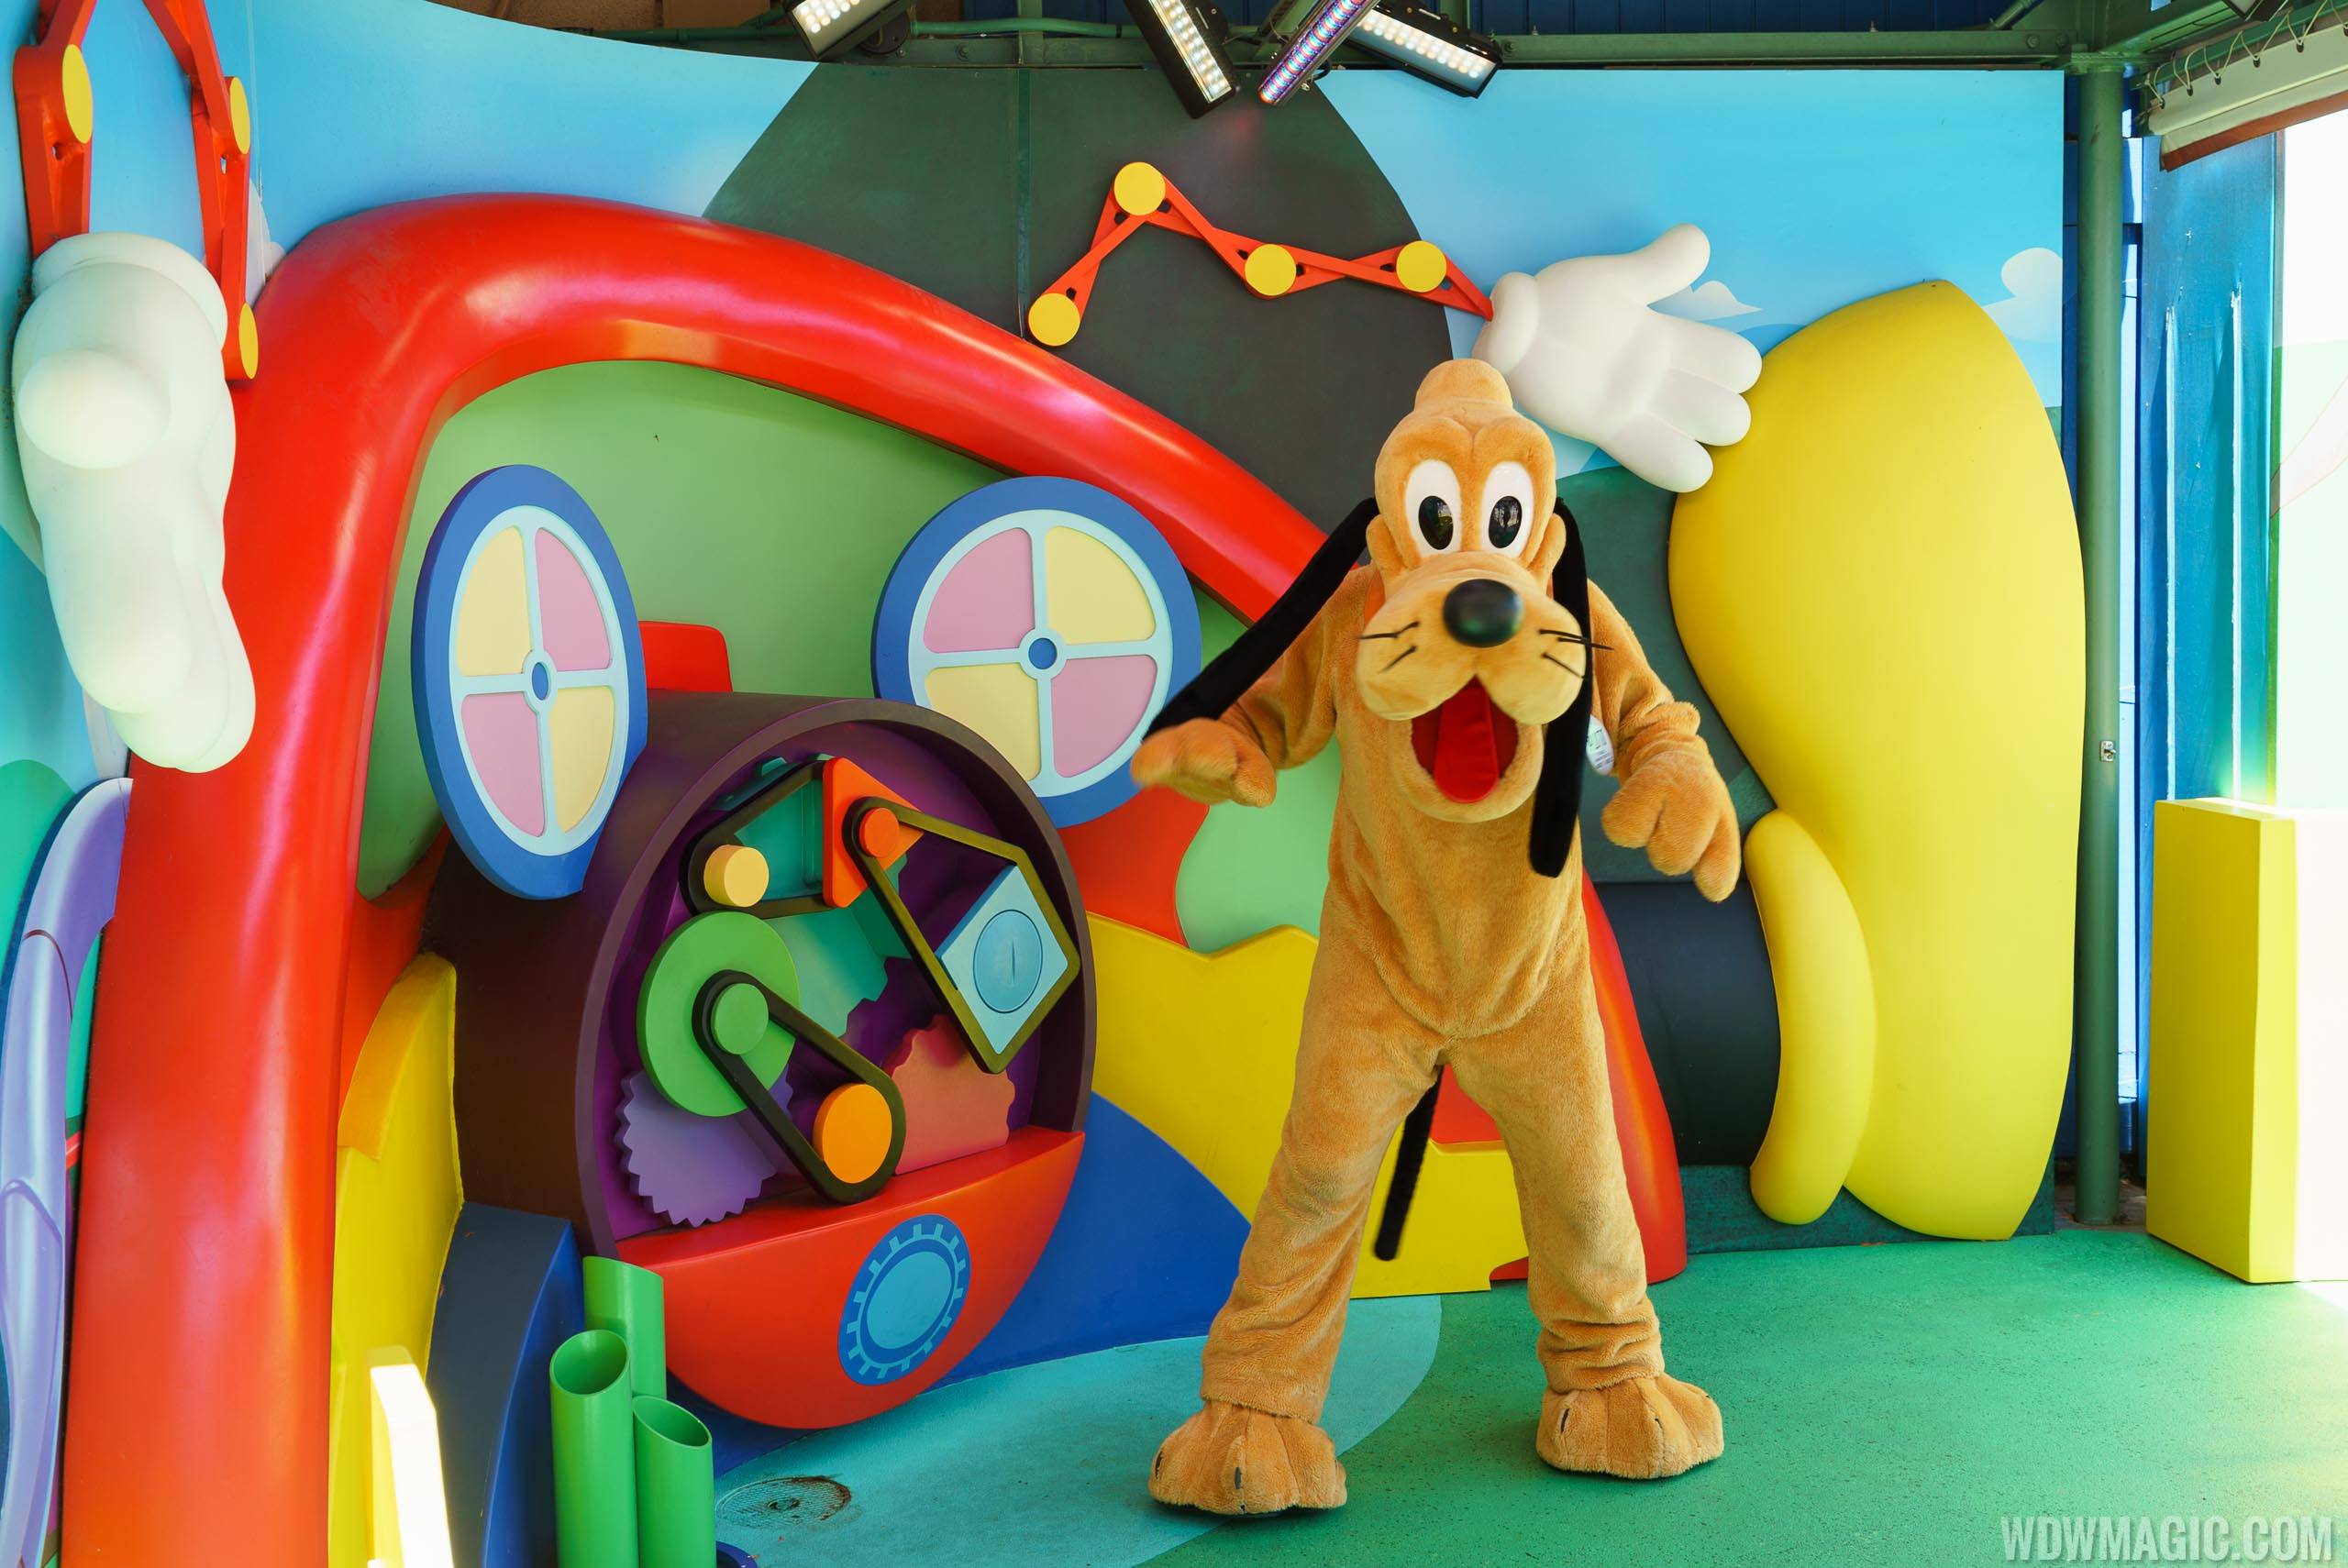 Disney Junior Pluto meet and greet